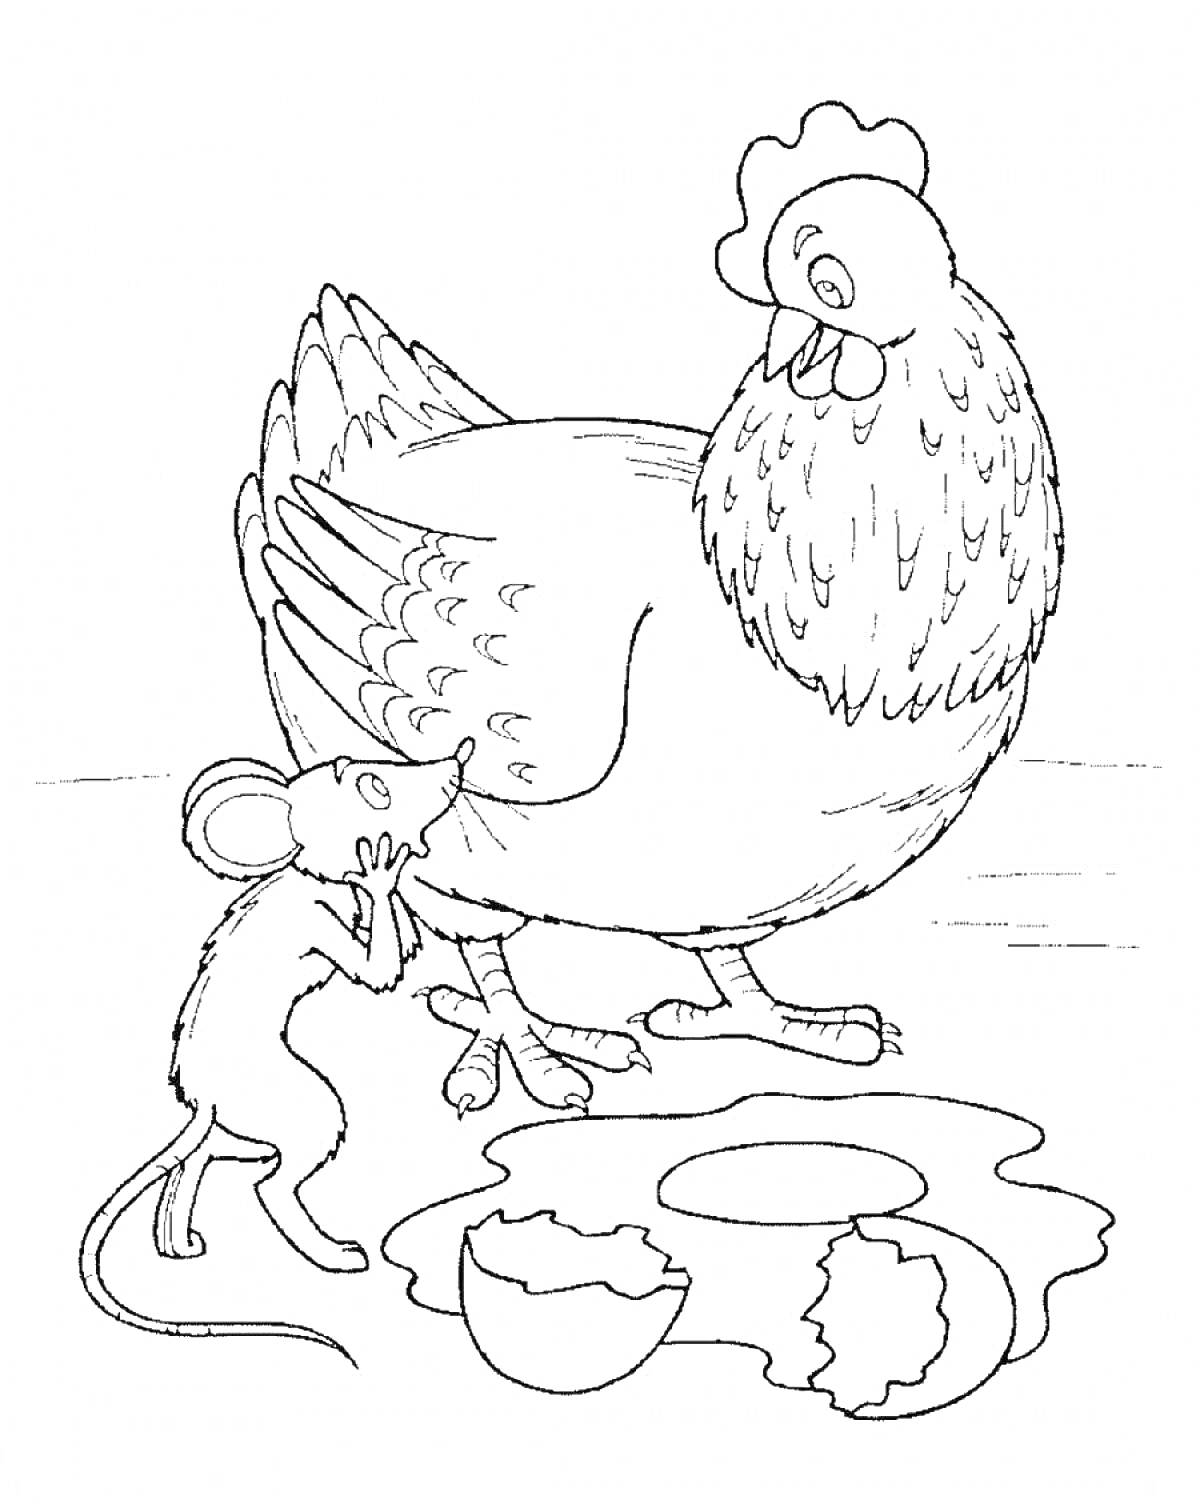 Раскраска Курица и мышь рядом с разбитыми яйцами